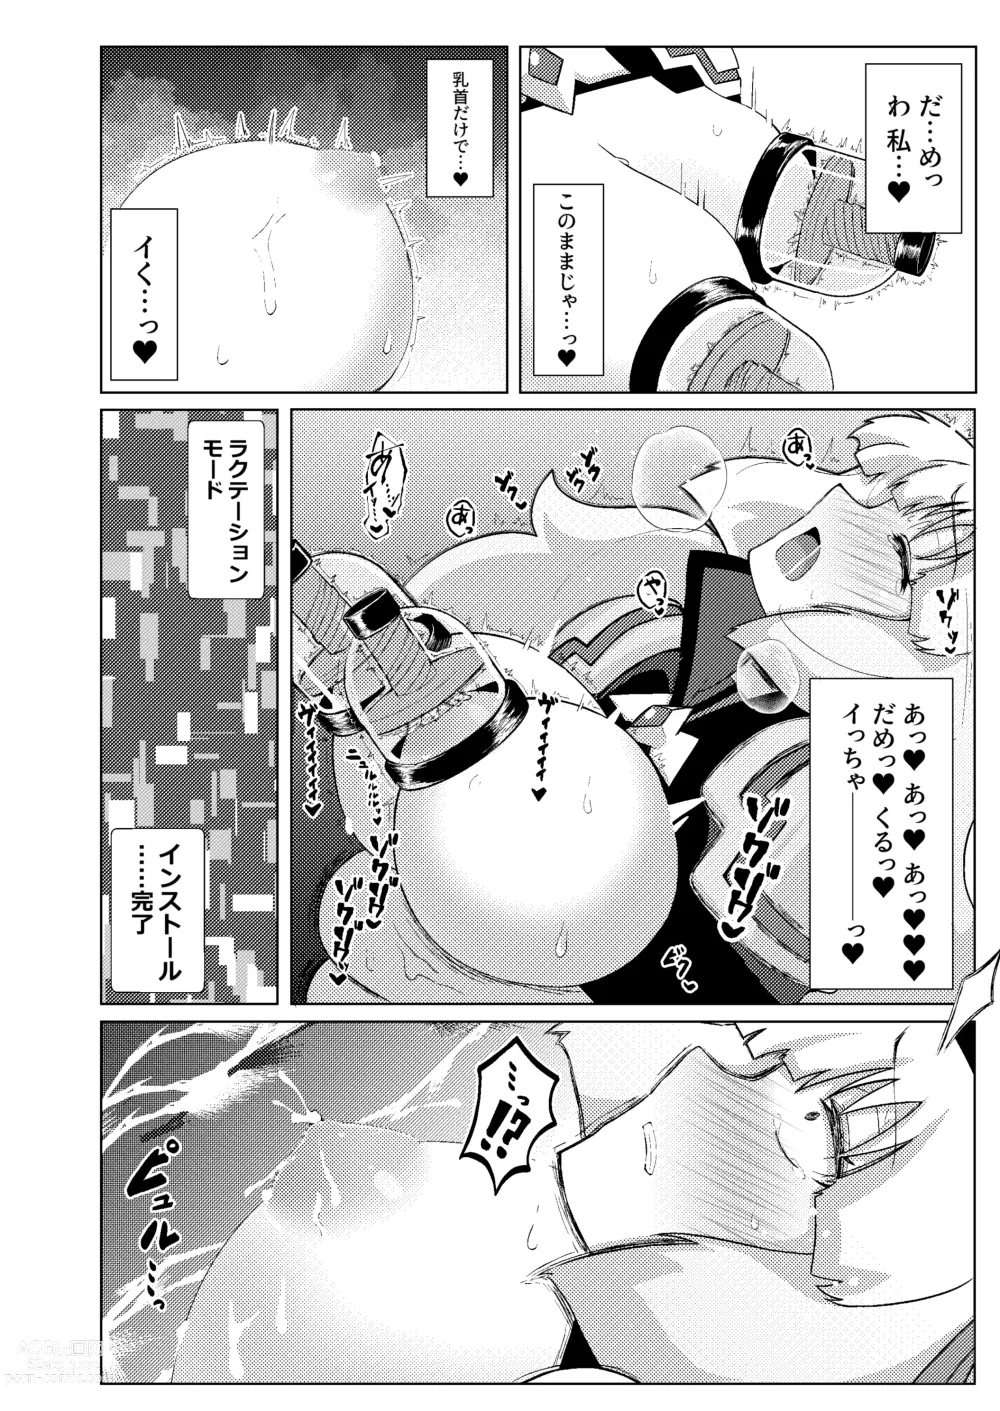 Page 7 of doujinshi EXTREME PREASURE